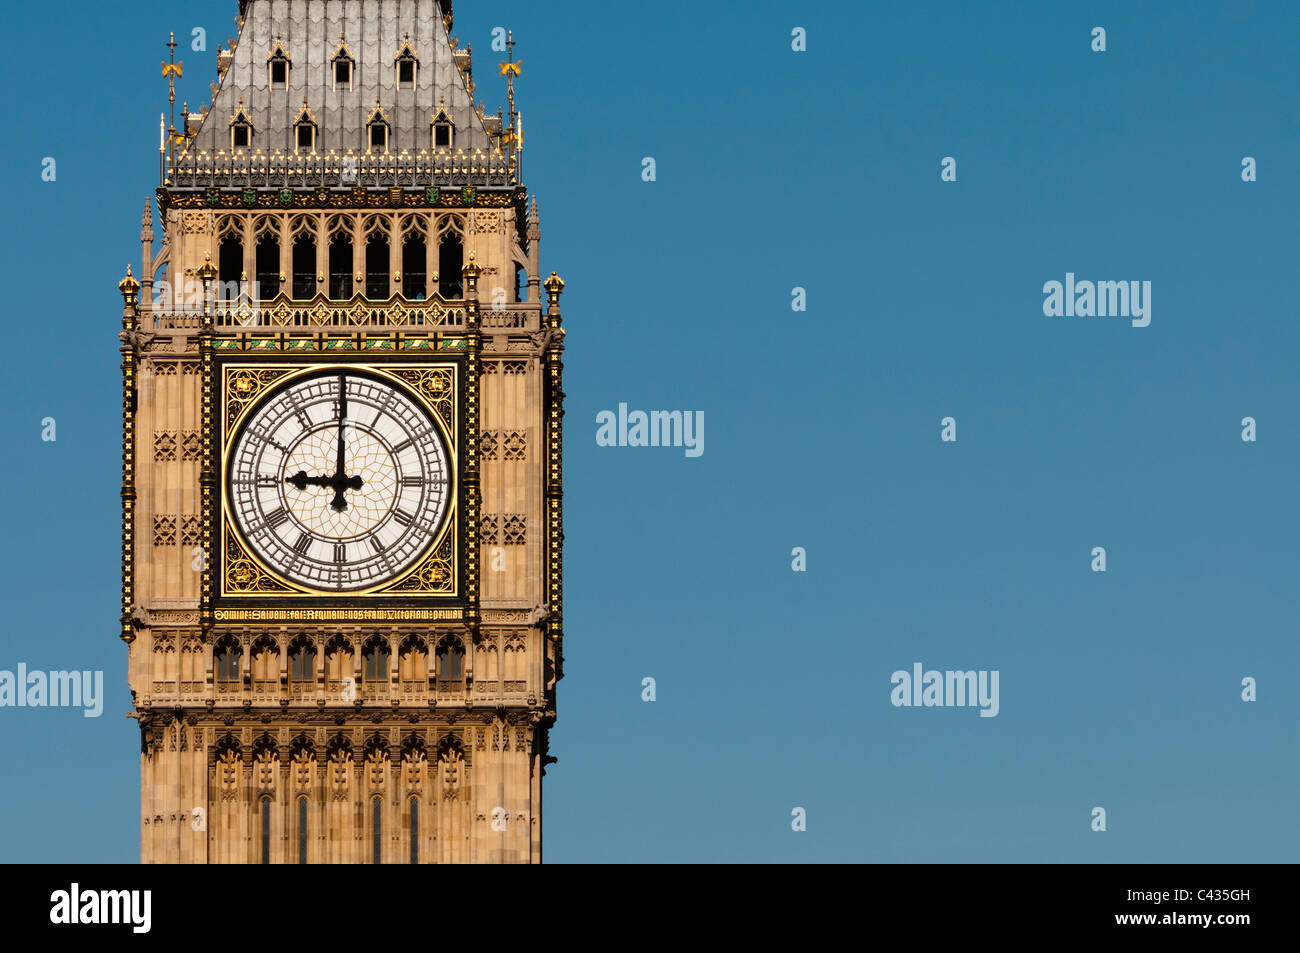 Big ben clock hi-res stock photography and images - Alamy